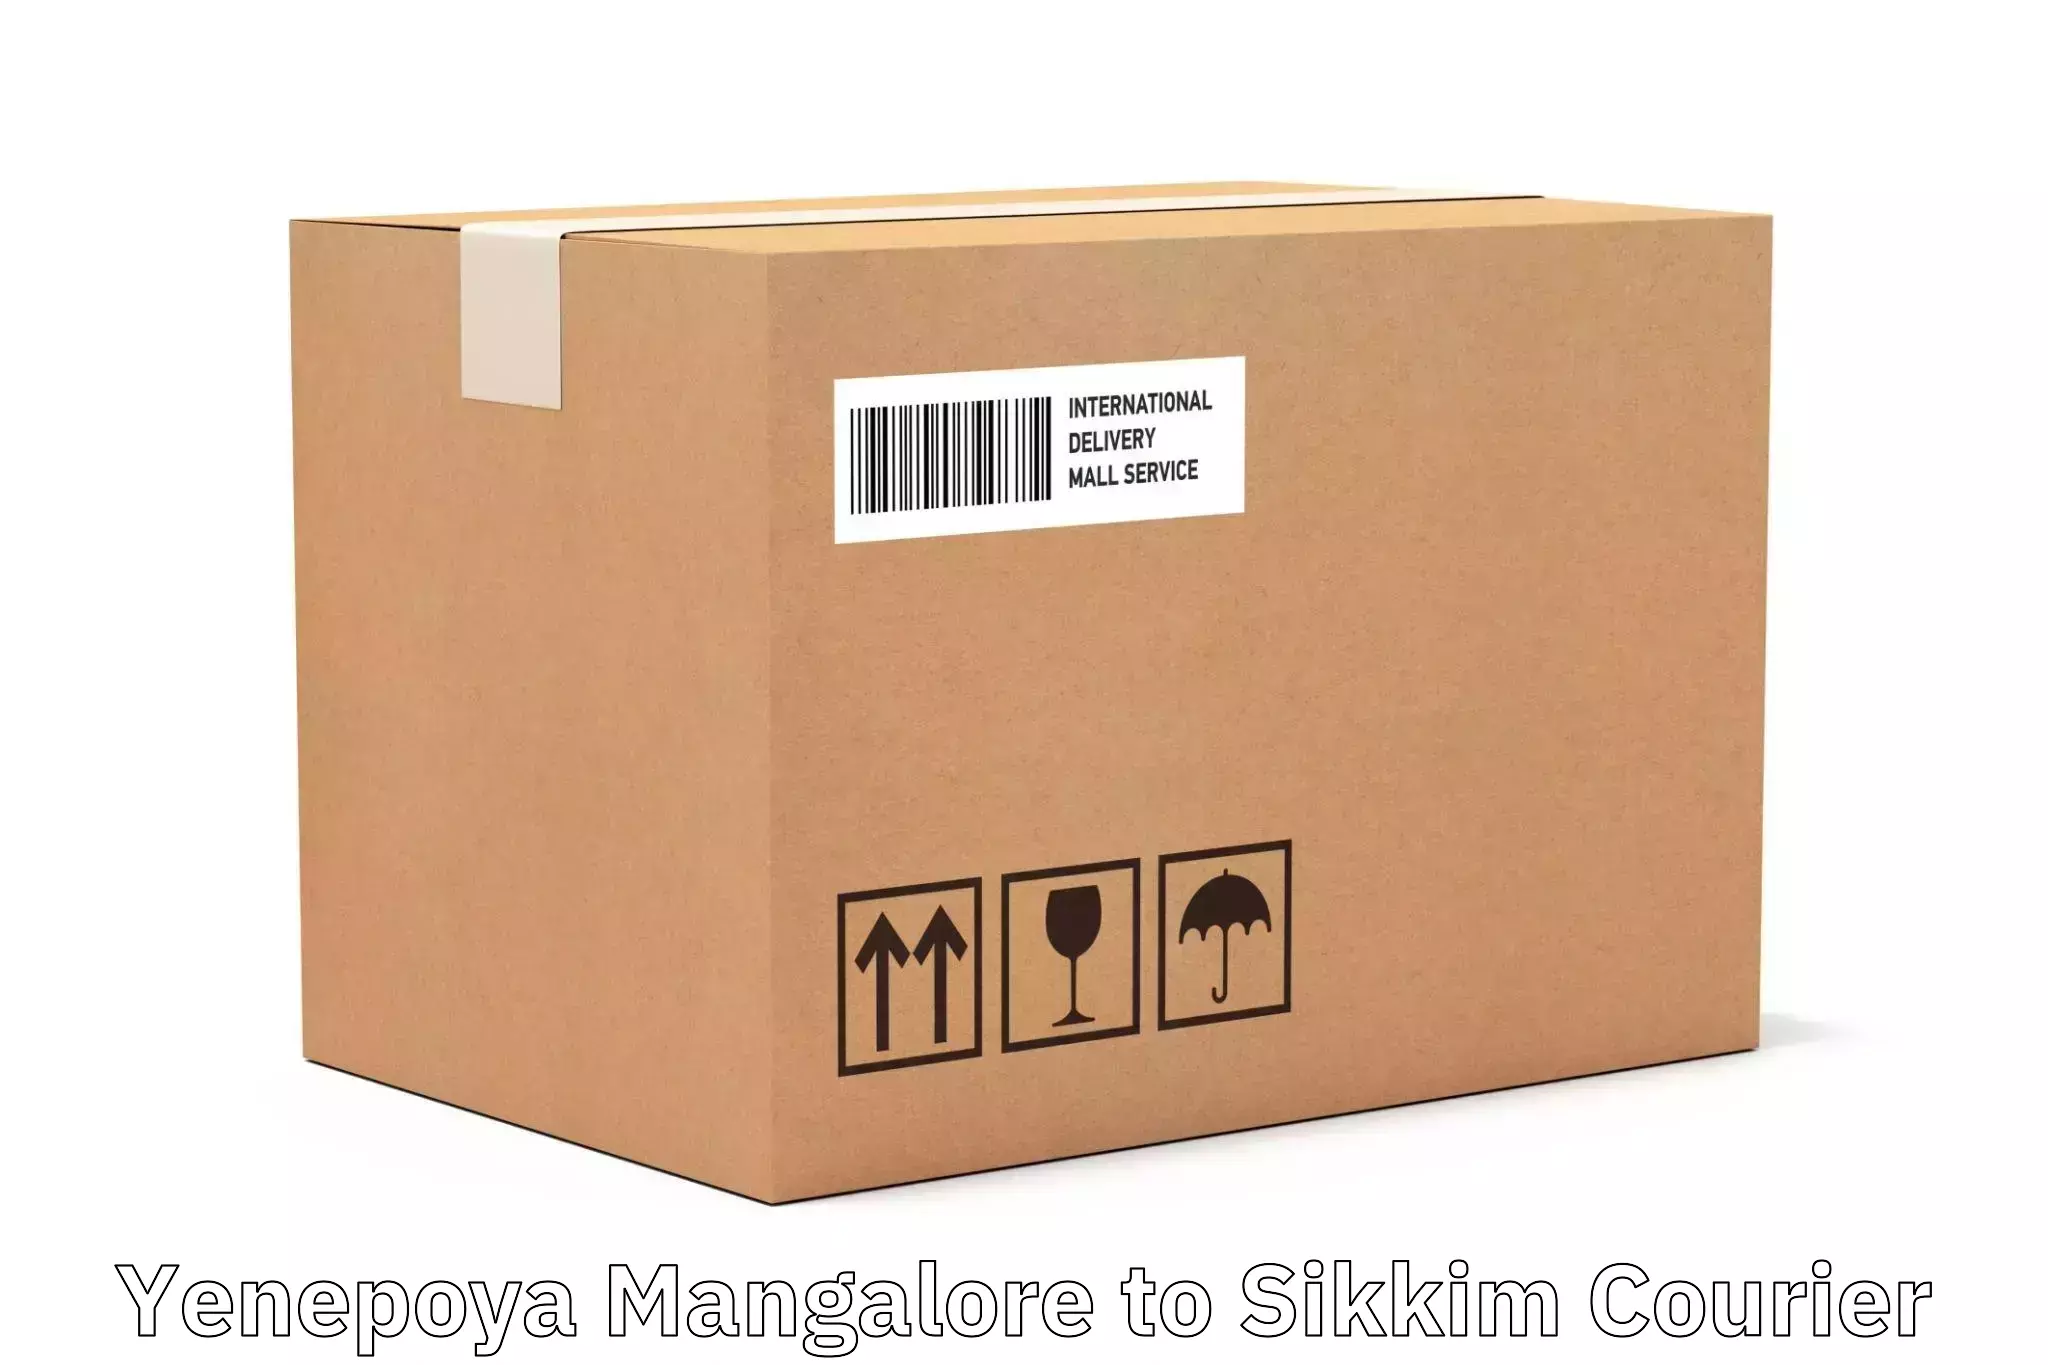 Business shipping needs Yenepoya Mangalore to Mangan